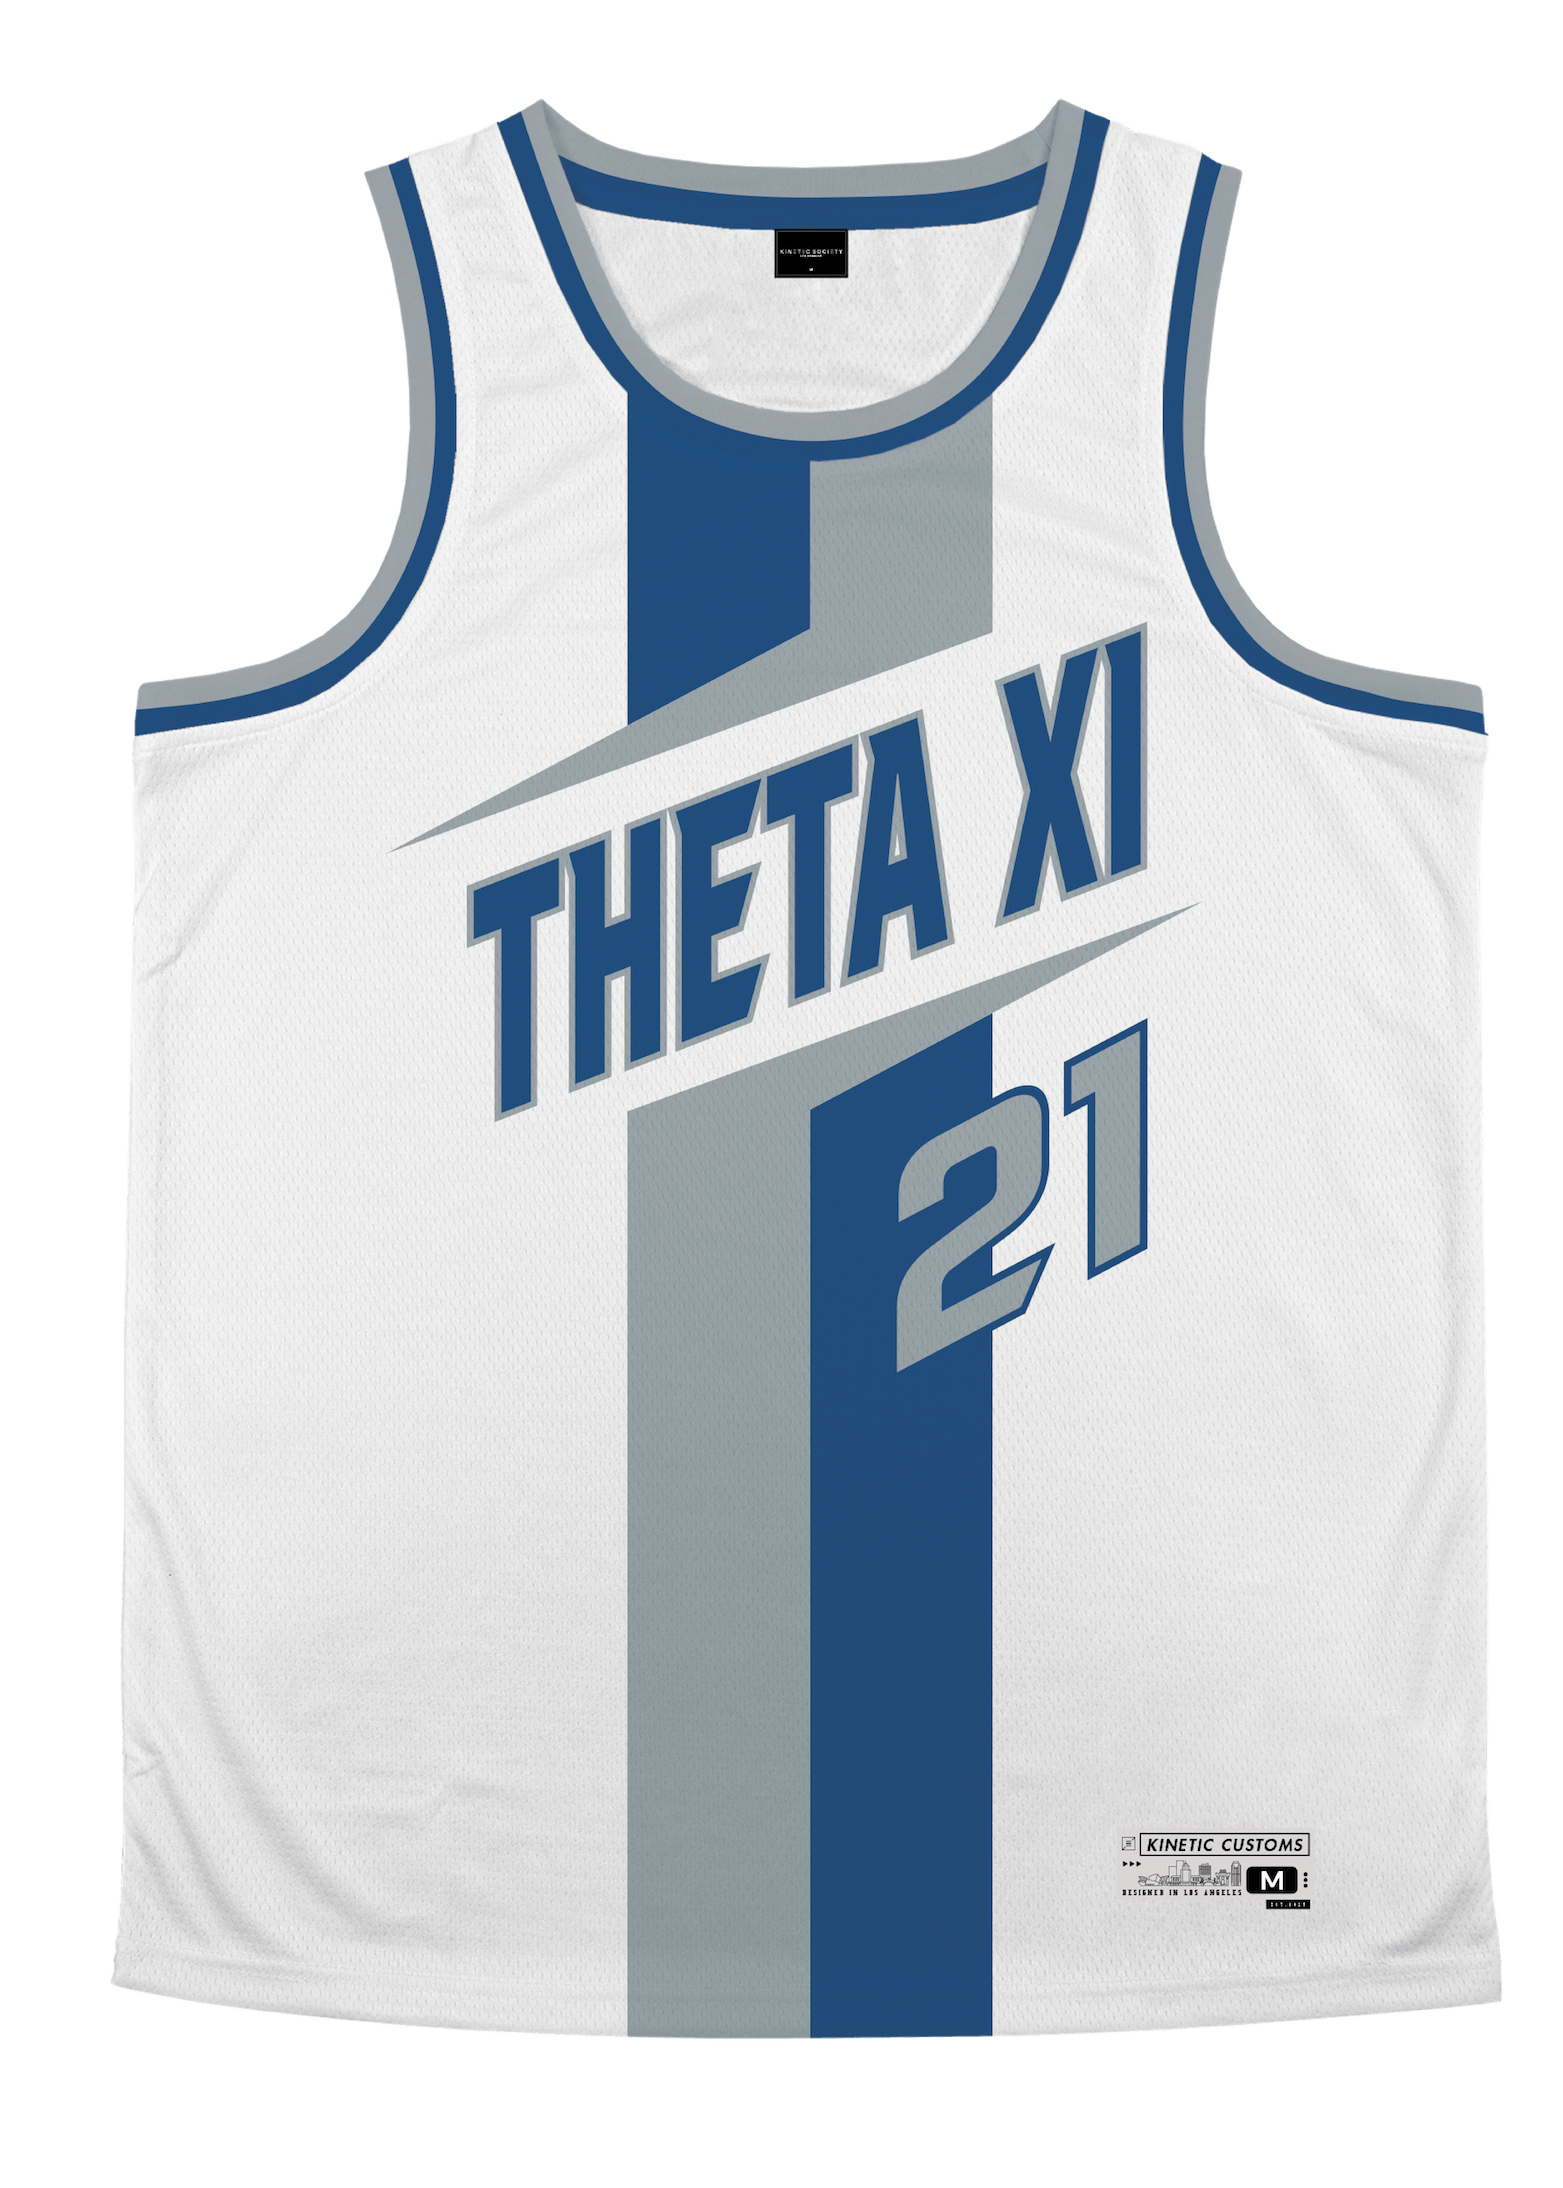 THETA XI - Middle Child Basketball Jersey Premium Basketball Kinetic Society LLC 